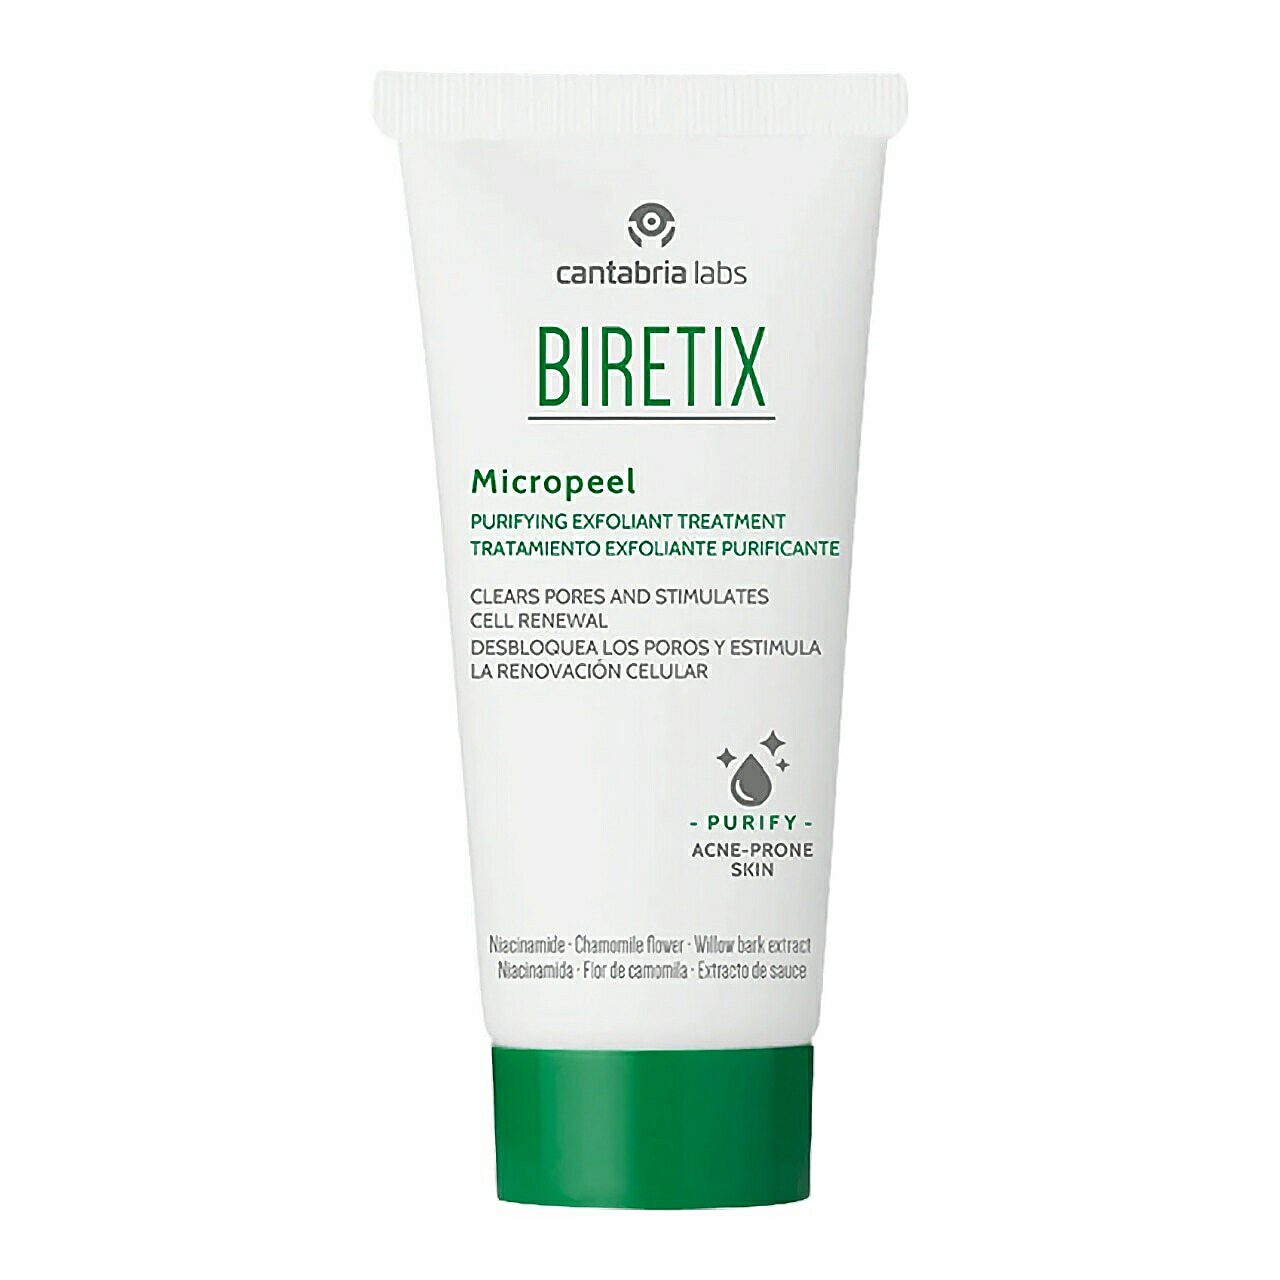 Biretix Micropeel, 50 ml